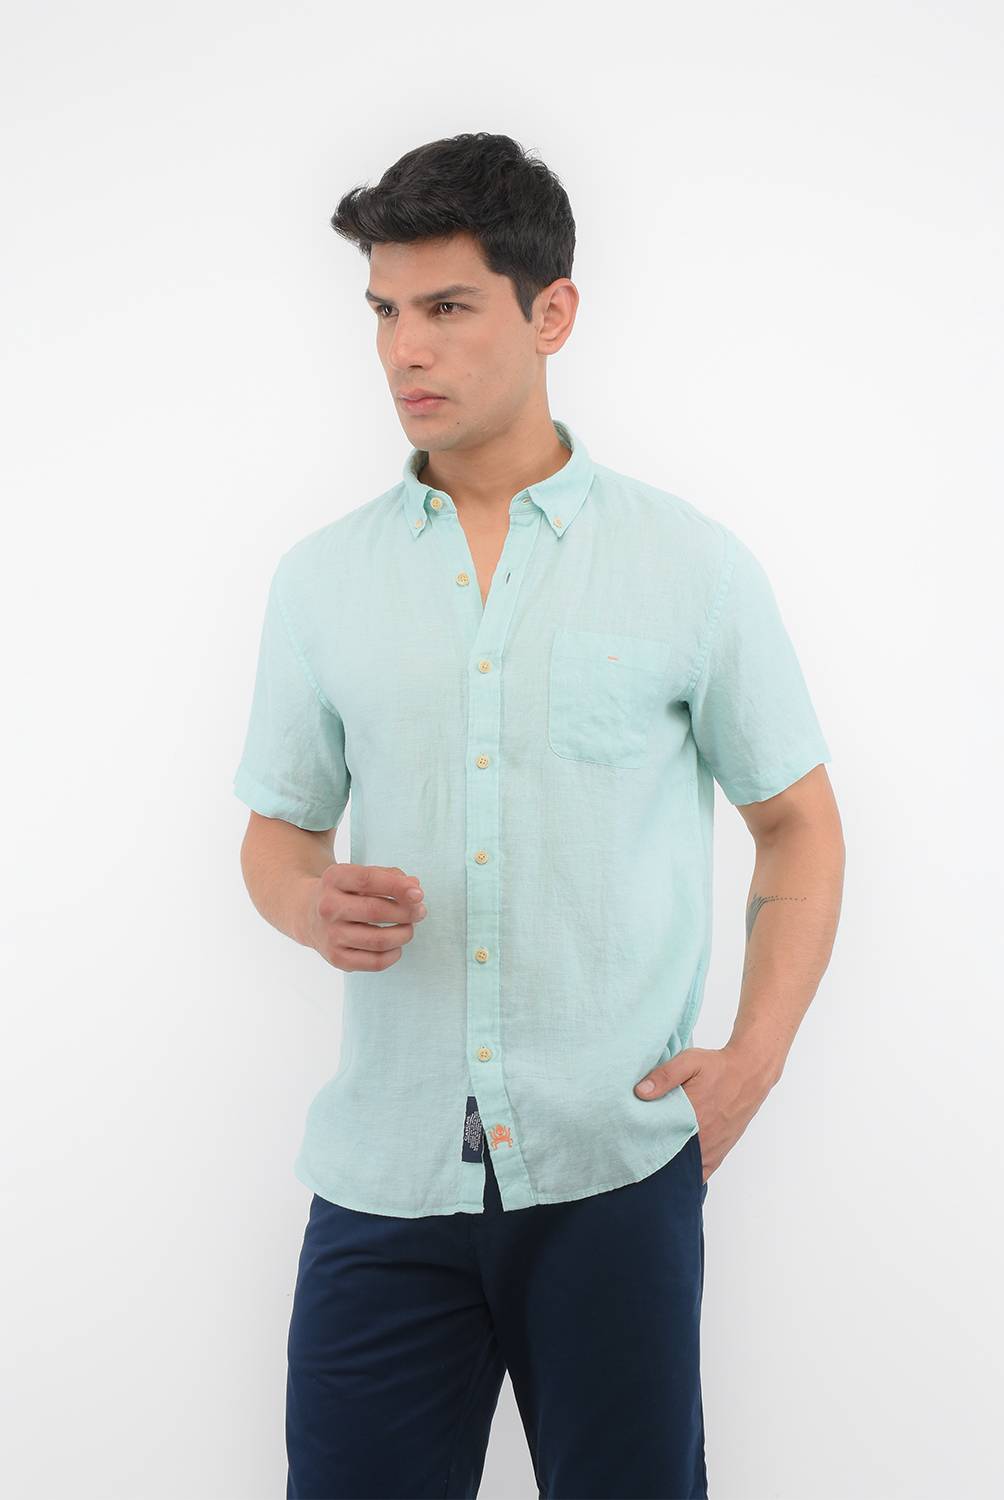 CASCAIS - Camisa casual Lino para Hombre Regular Cascais.